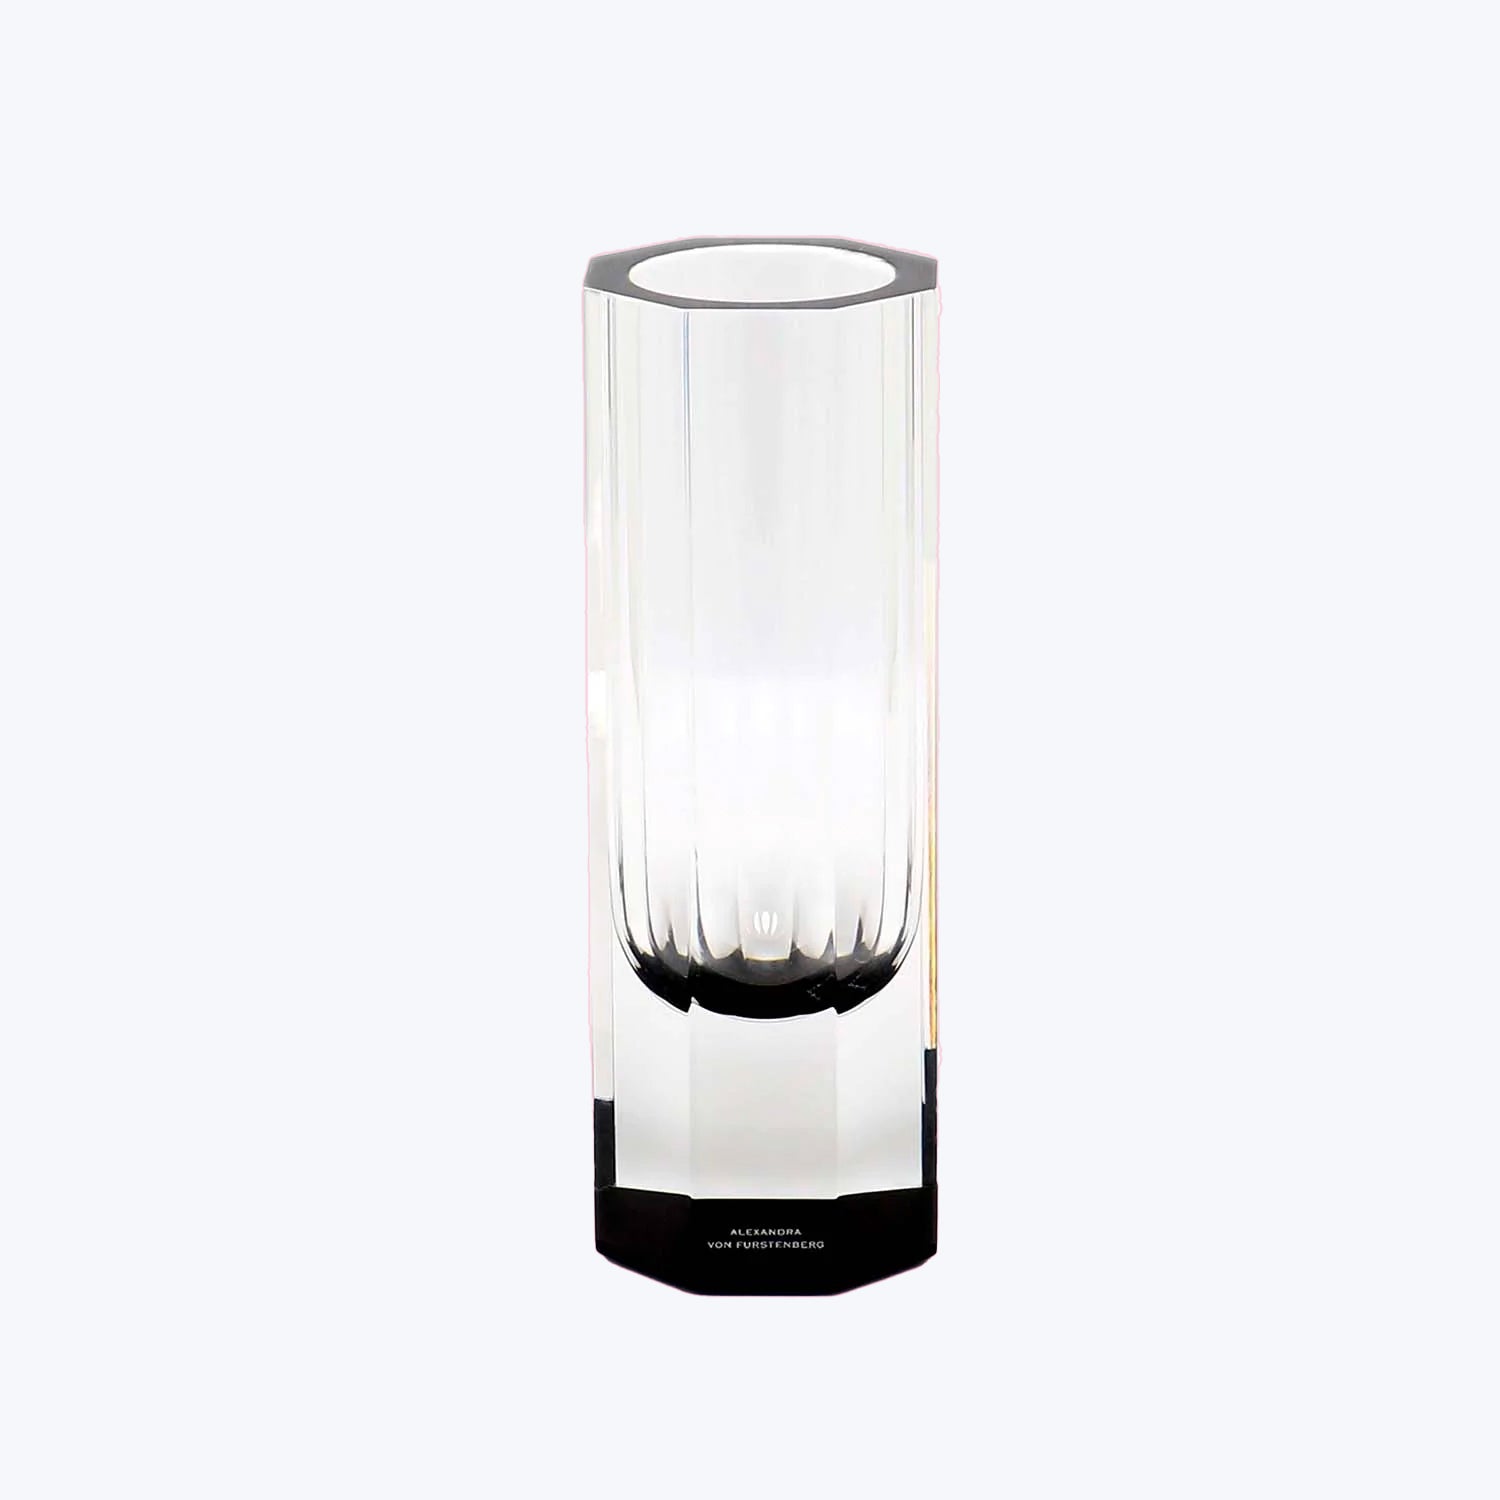 Modern, minimalist designer vase with transparent body and textured ridges.